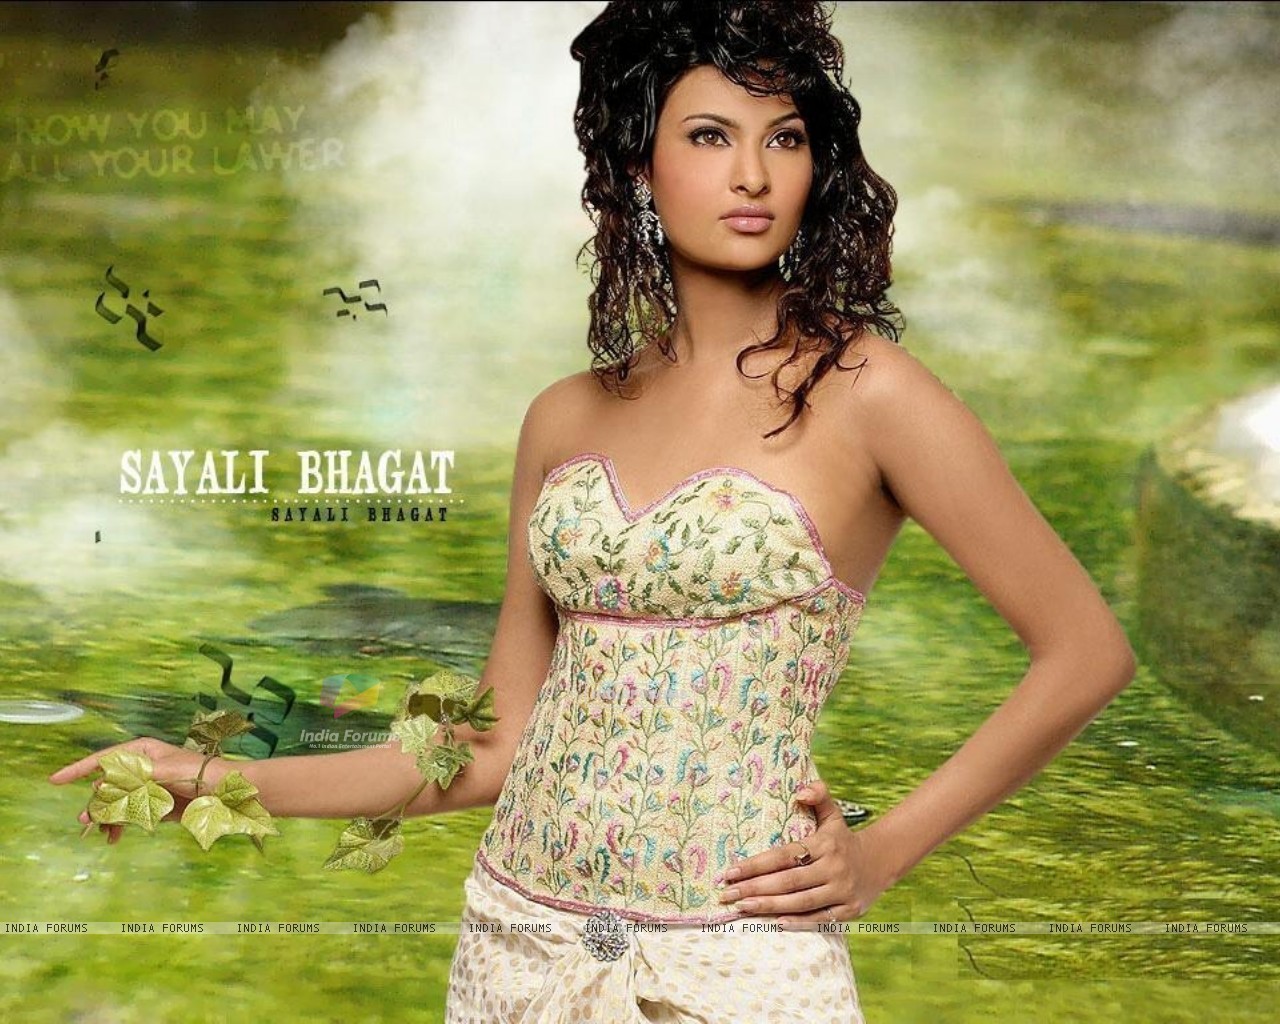 Sayali Bhagat - Images